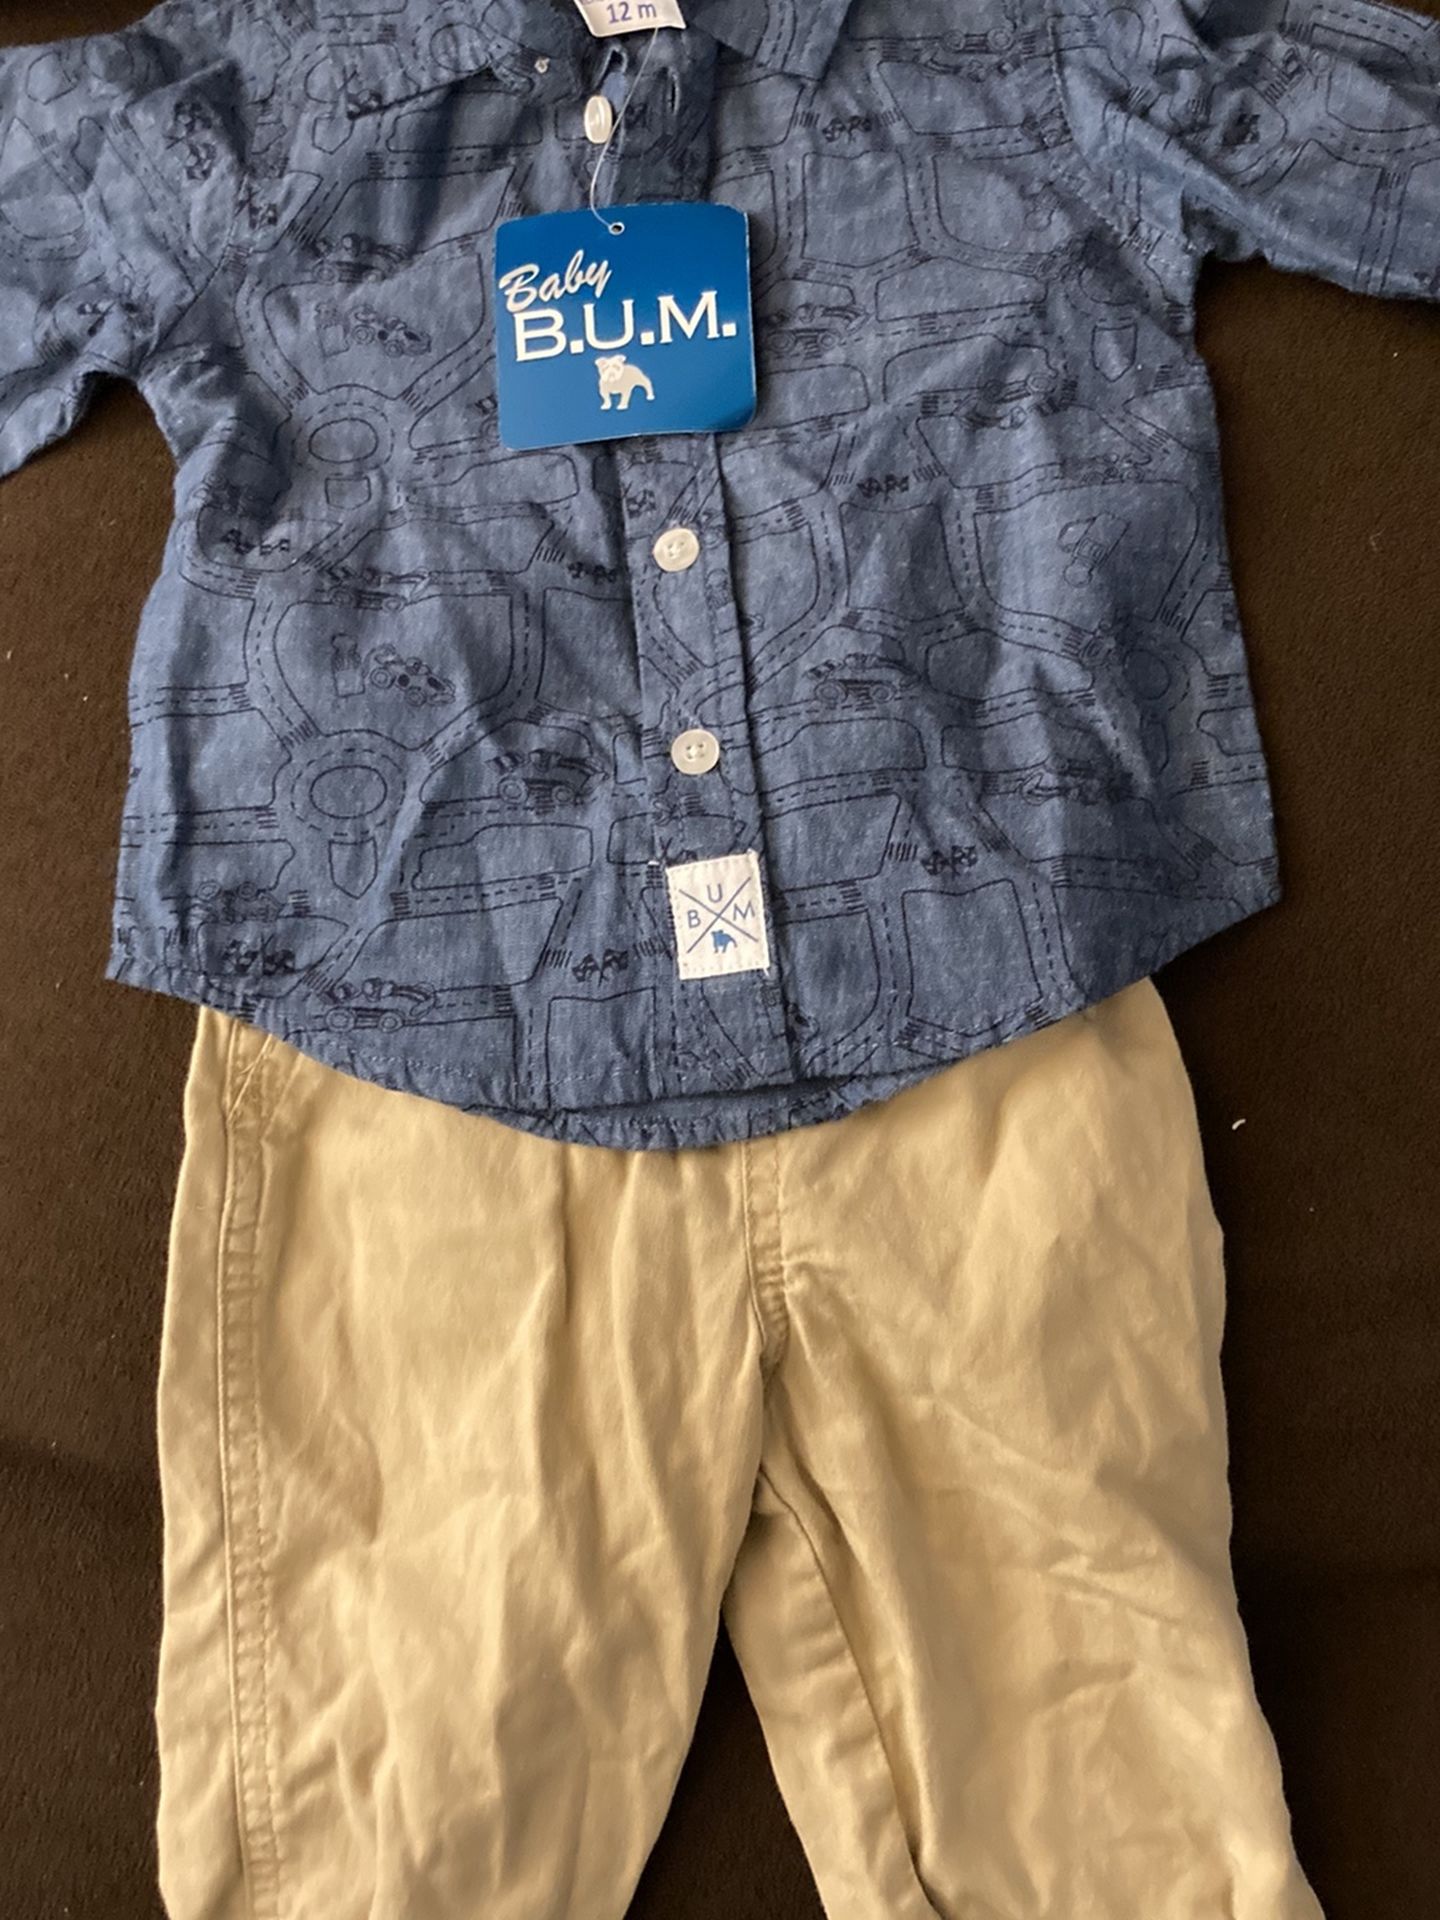 Carter's, Baby B.U.M, An Puma Baby Clothes